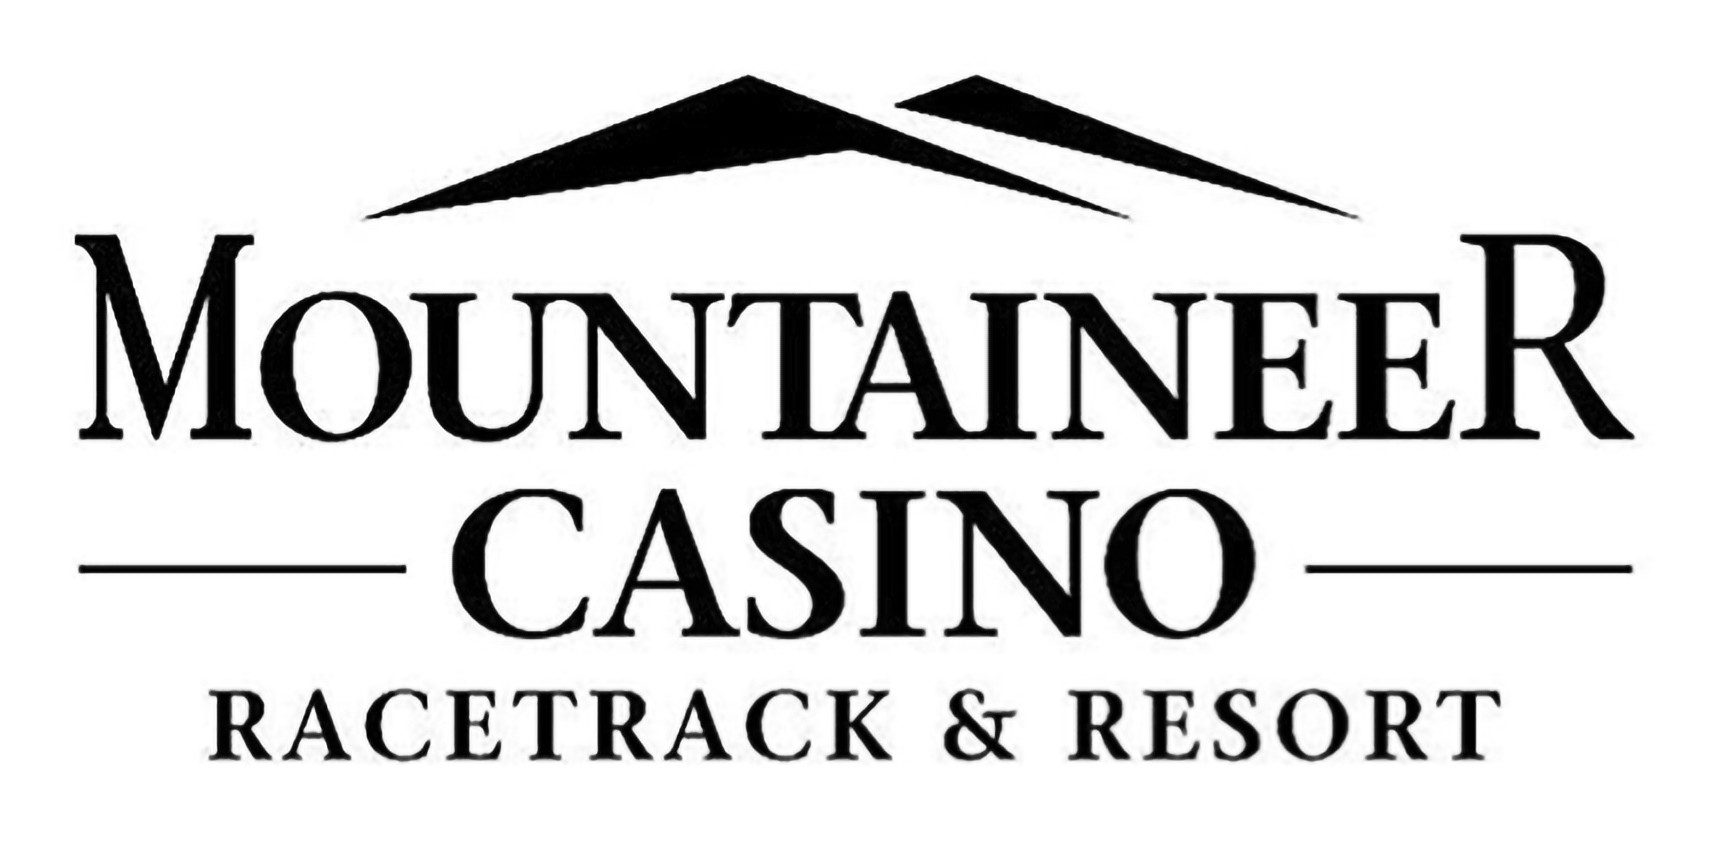 Mountaineer Casino